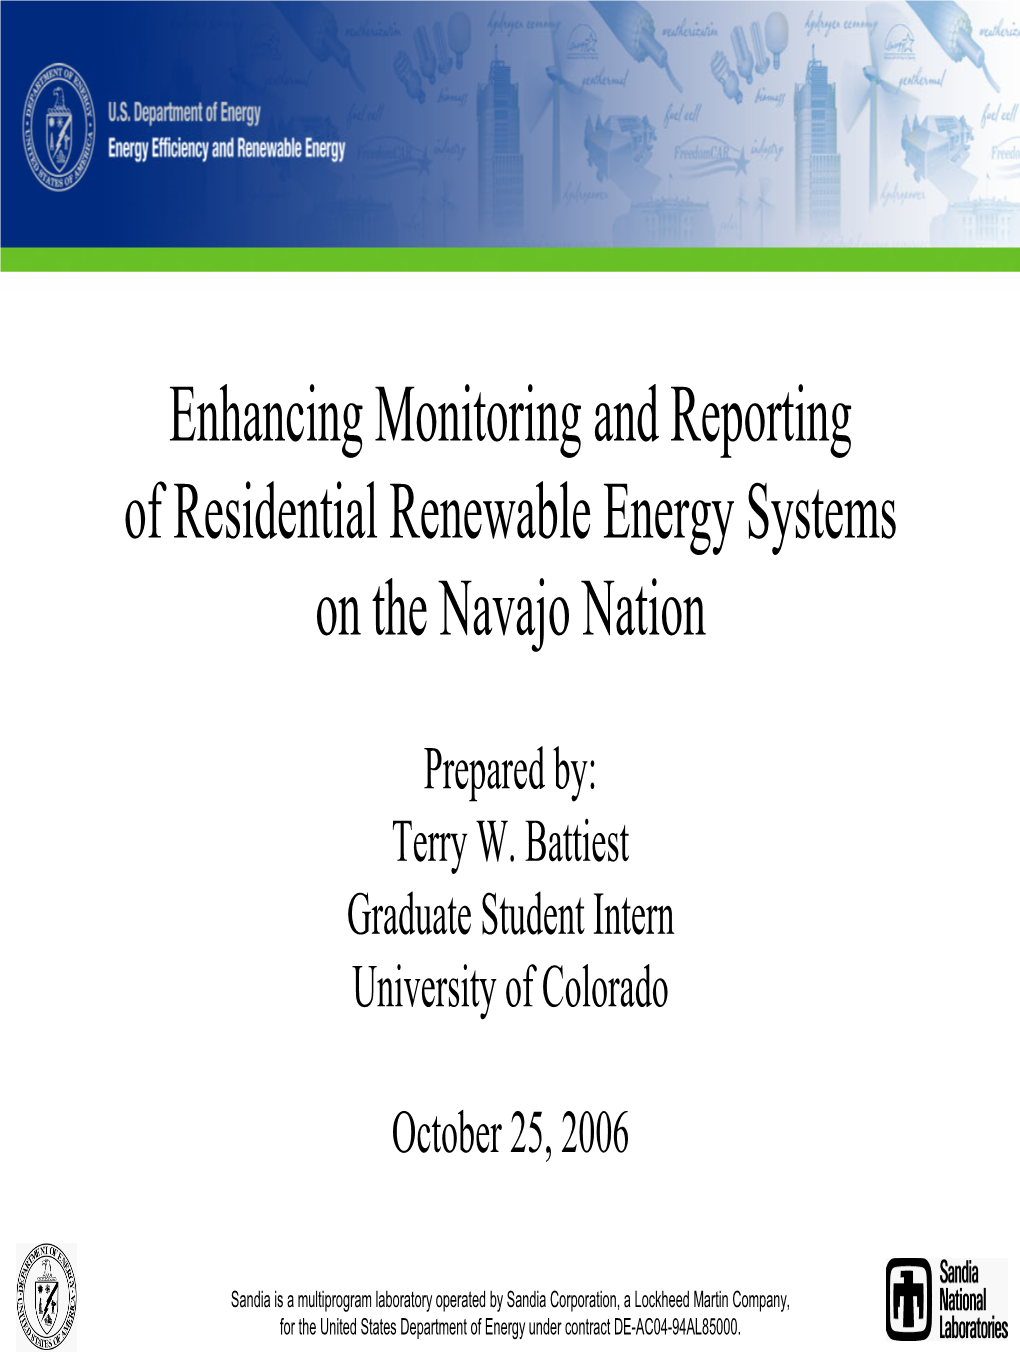 Tribal Energy Program Internship Paper and Experiences